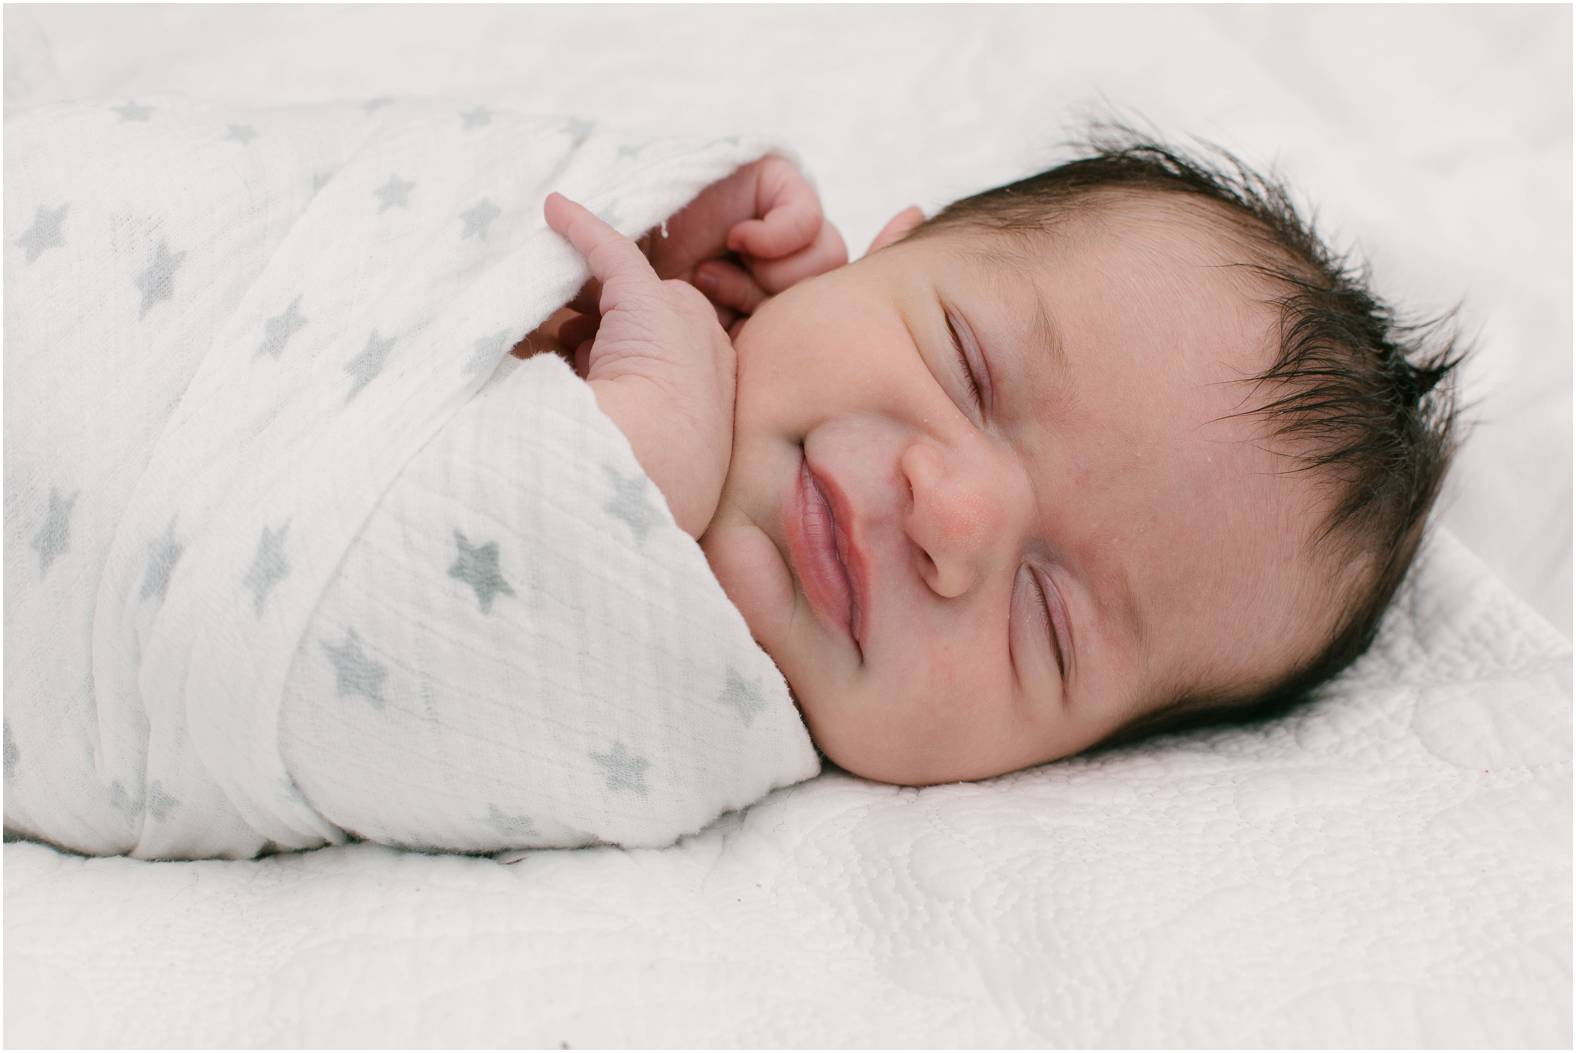 Newborn baby boy with dark hair swaddled in a neutral blanket